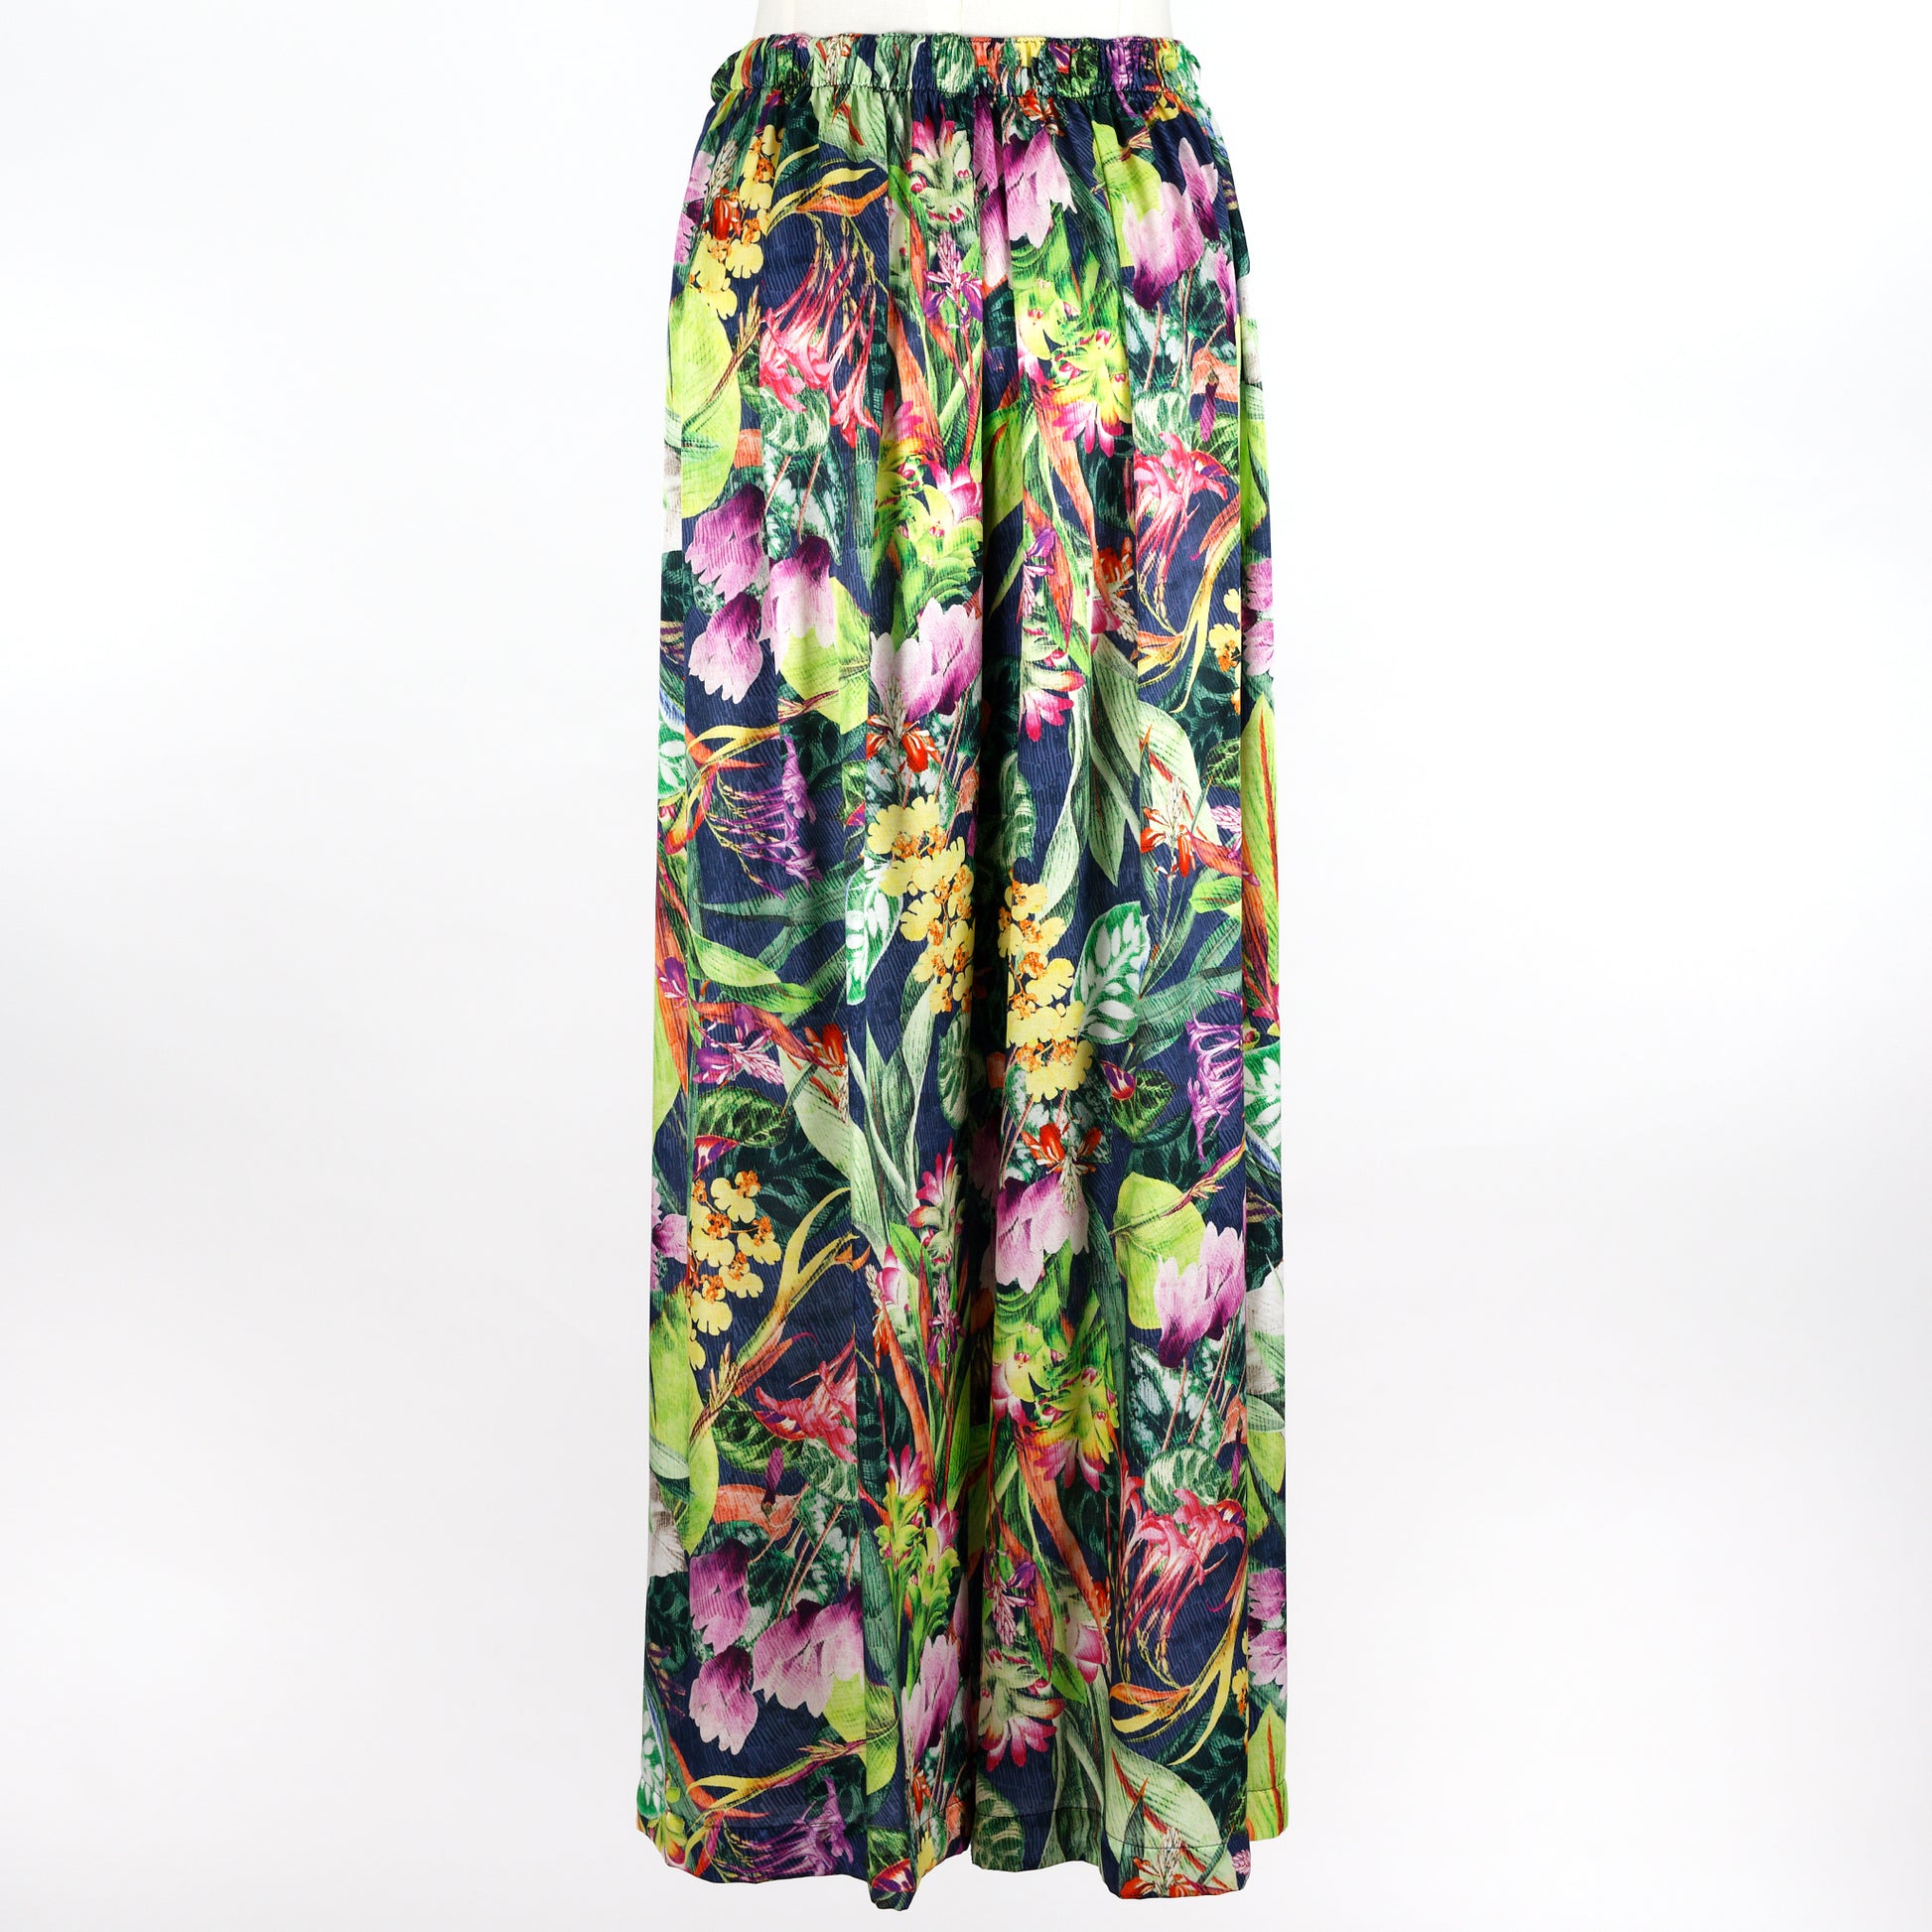 Silk lounge pyjama pants in tropical style from Carmen Kirstein